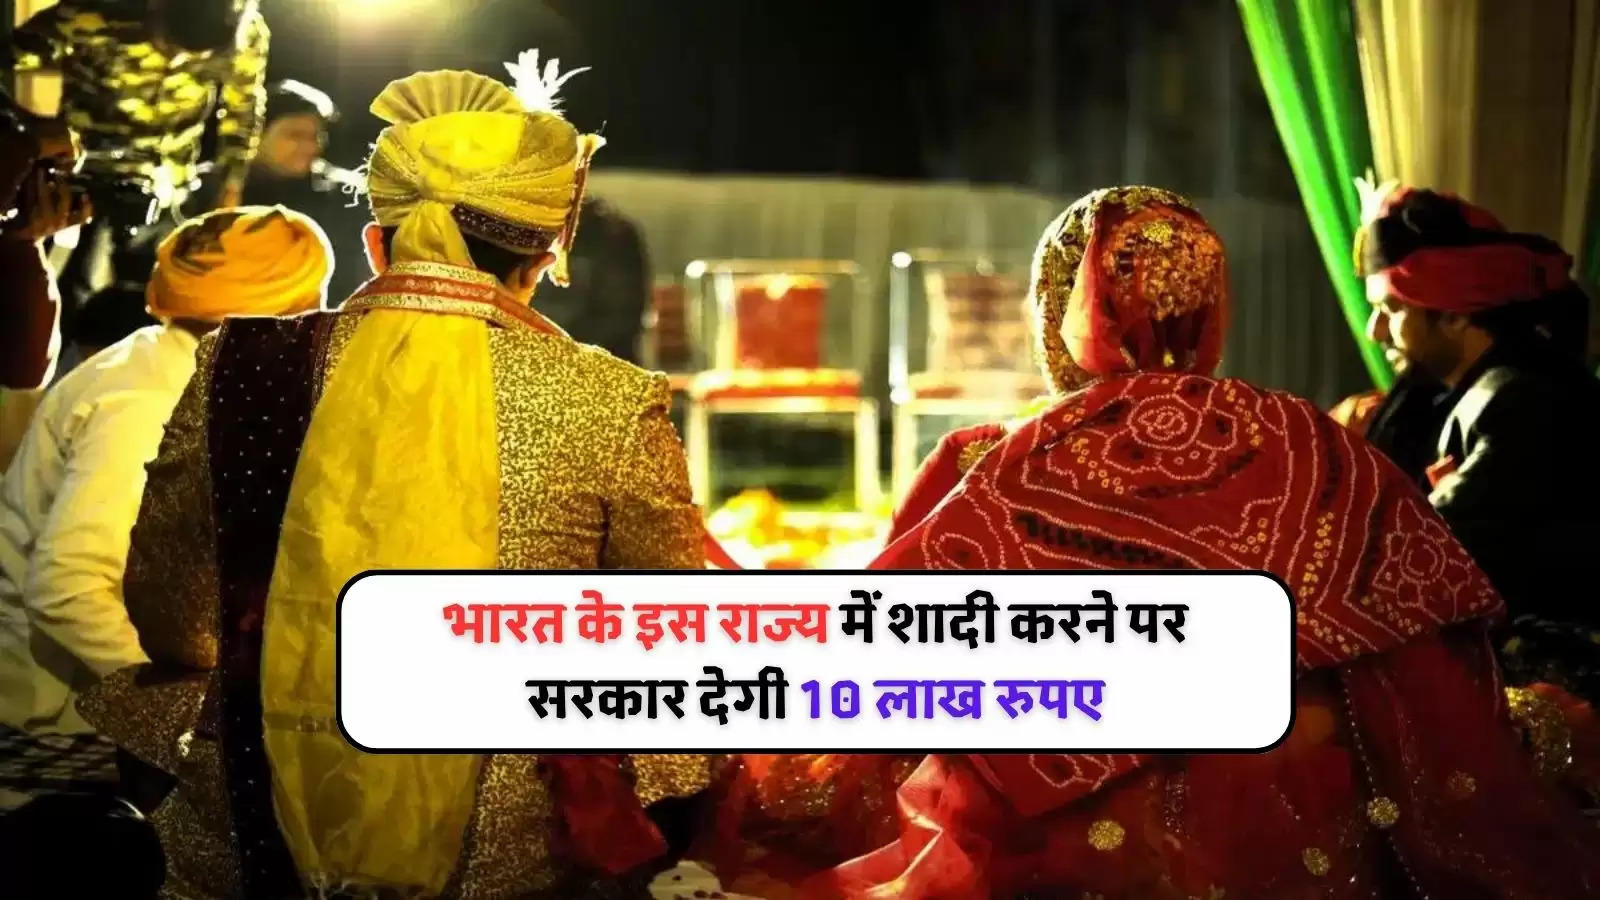 Rajasthan intercaste marriage